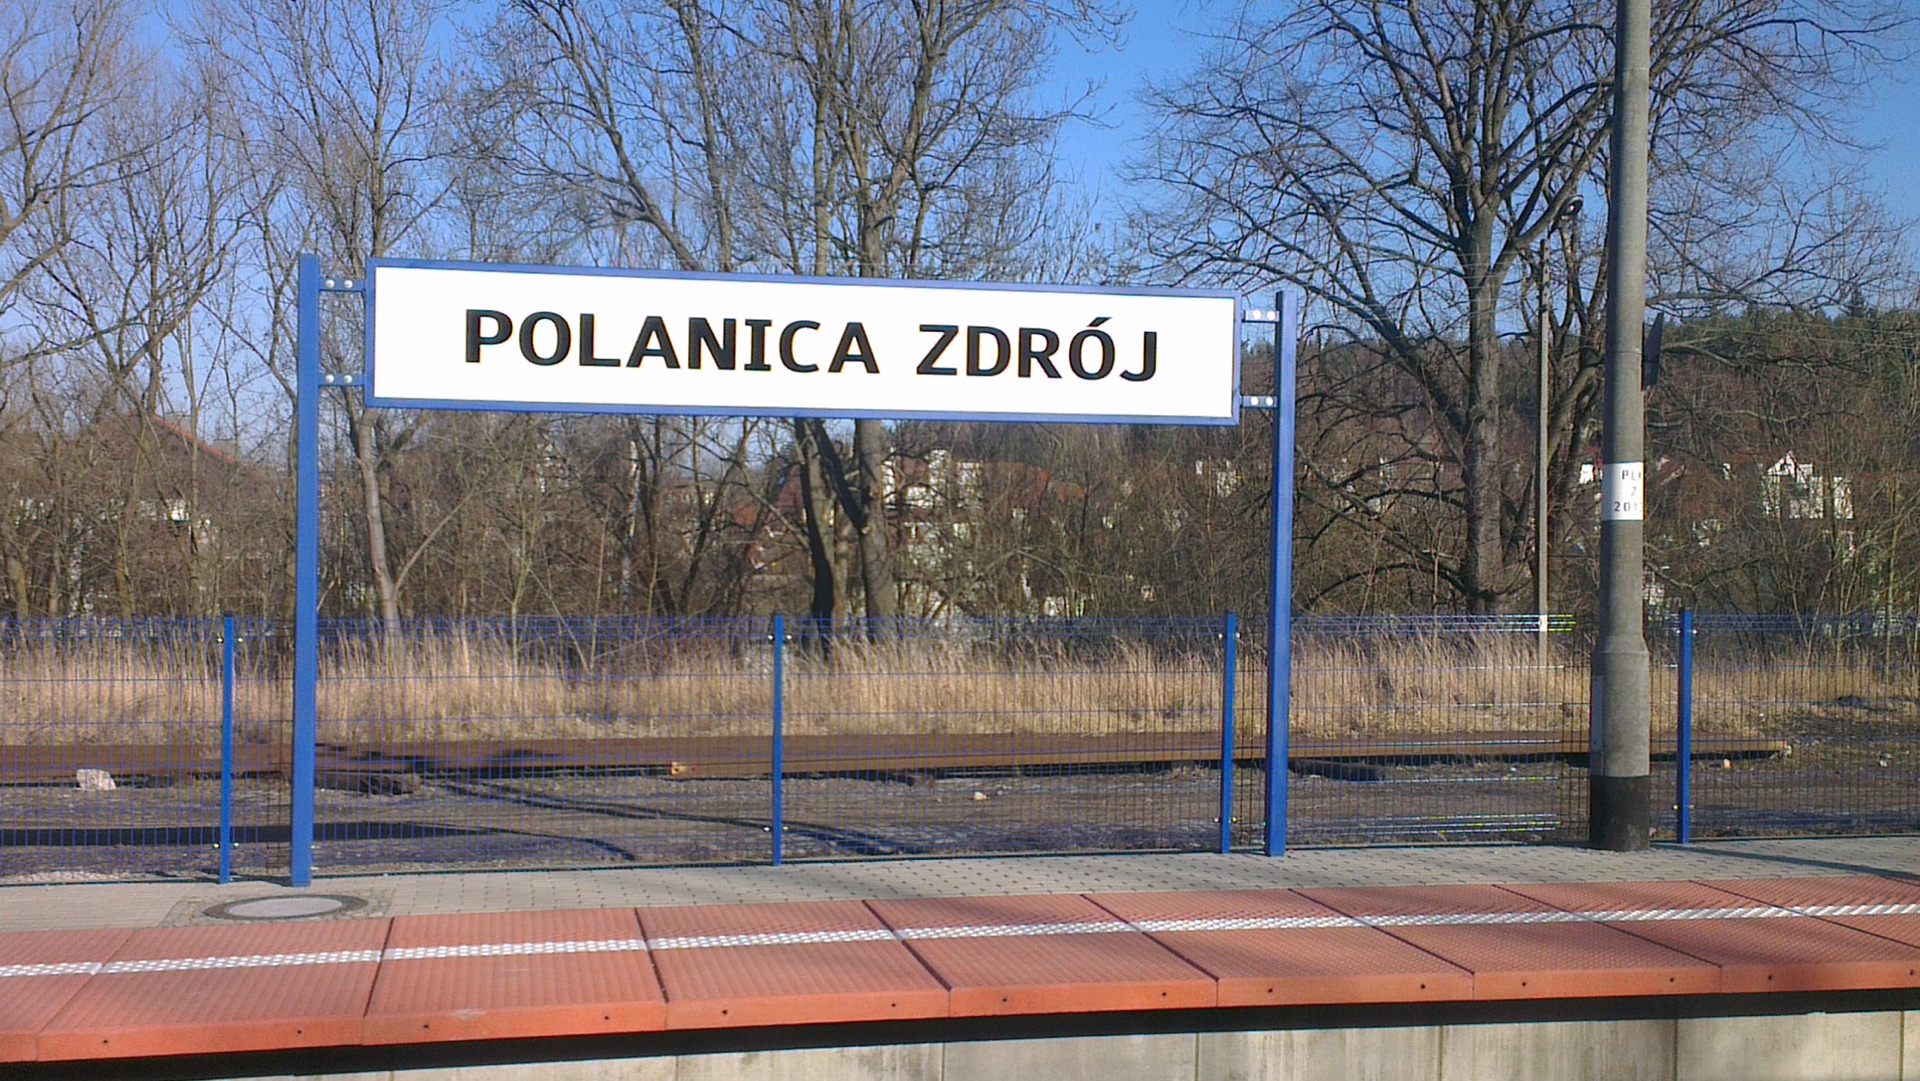 Station at Polanica Zdrój